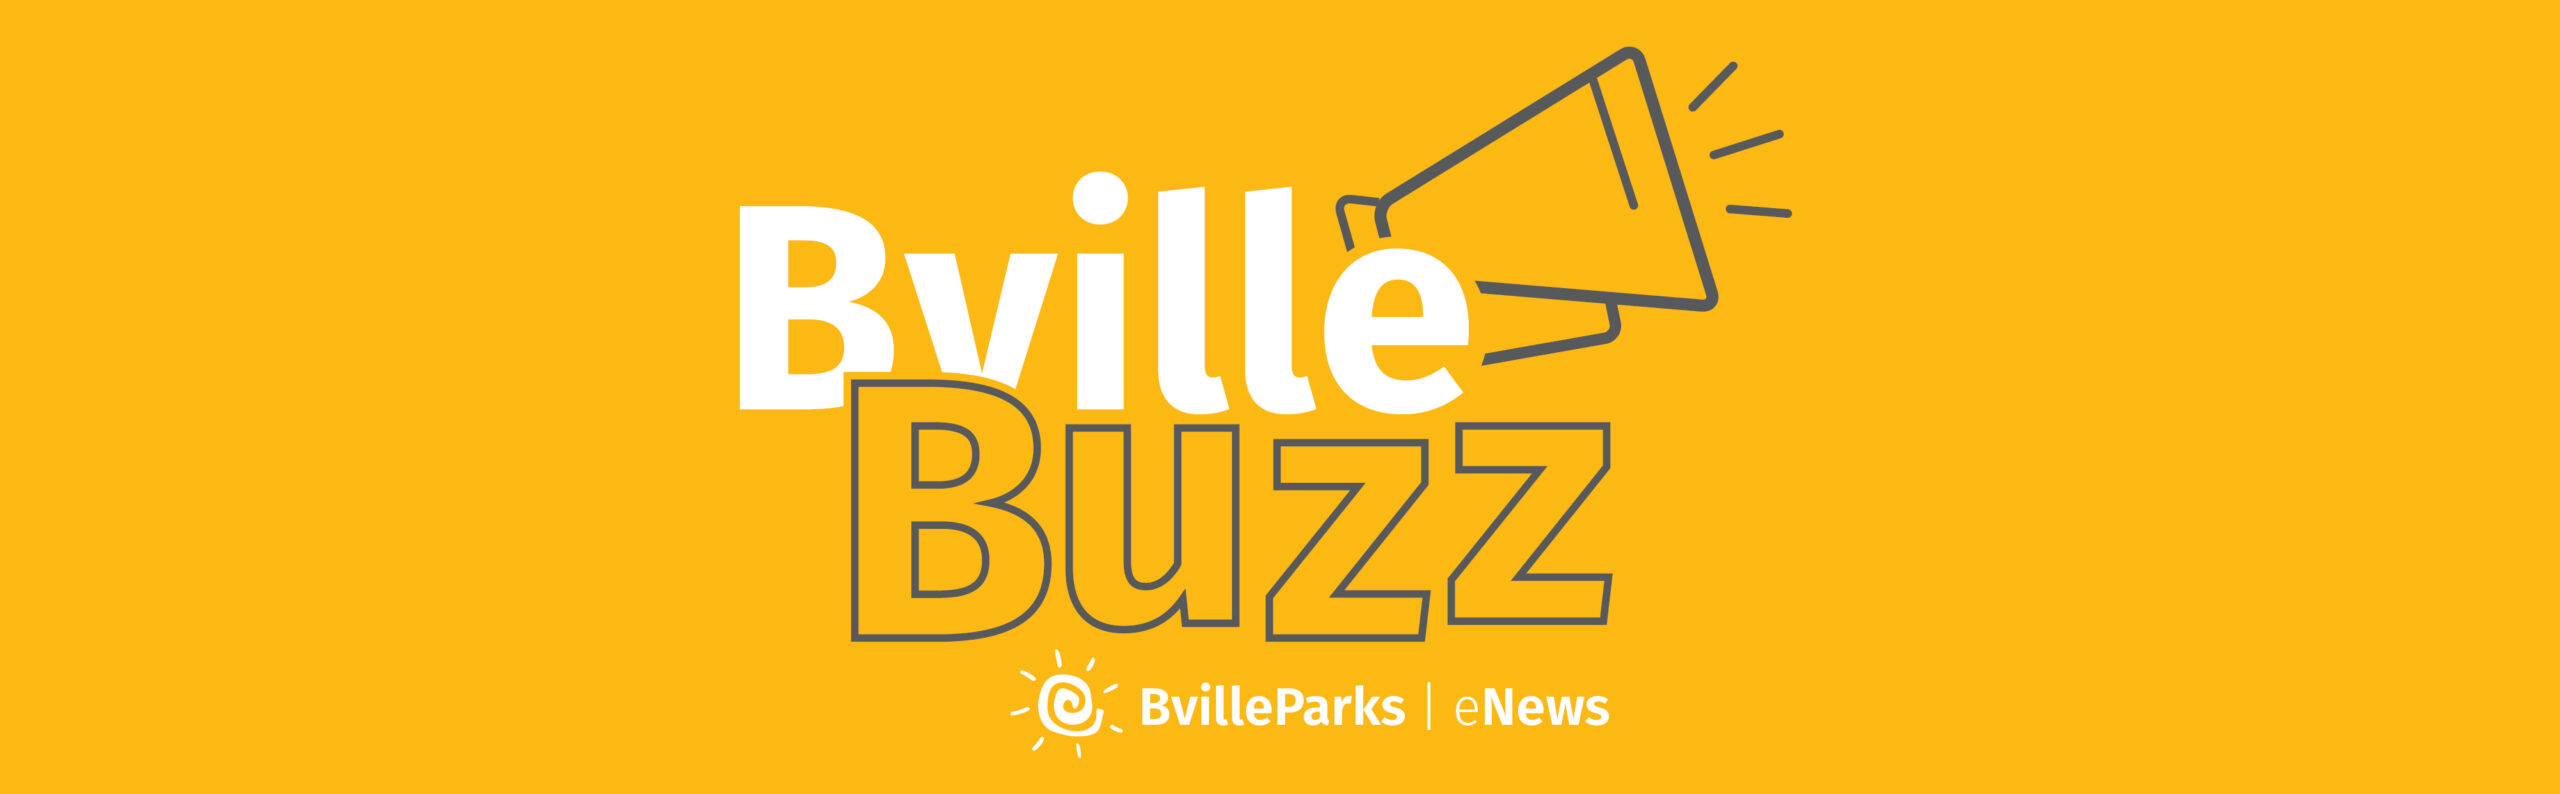 Bville Buzz Bensenville Park District